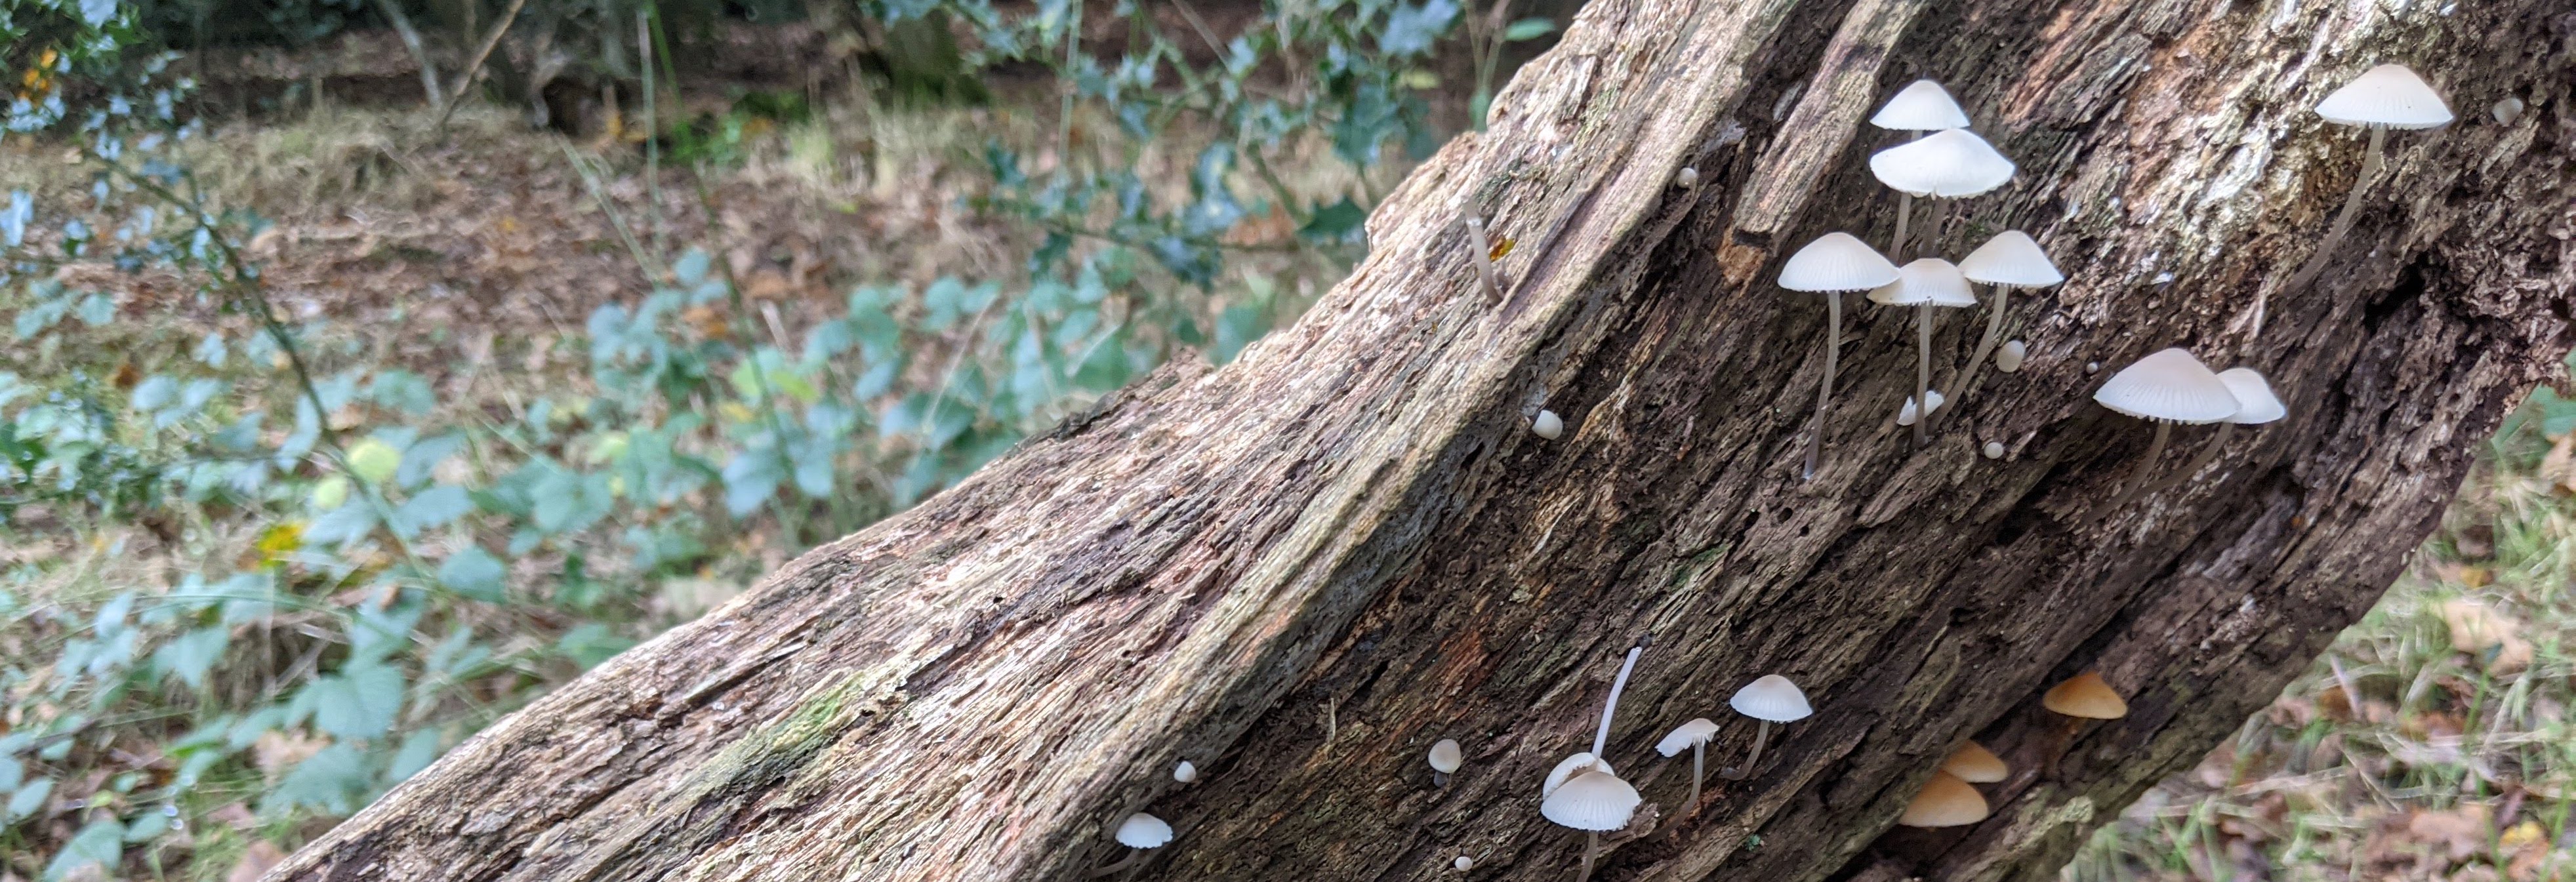 white mushrooms growing on a tree - type of mushroom unknown